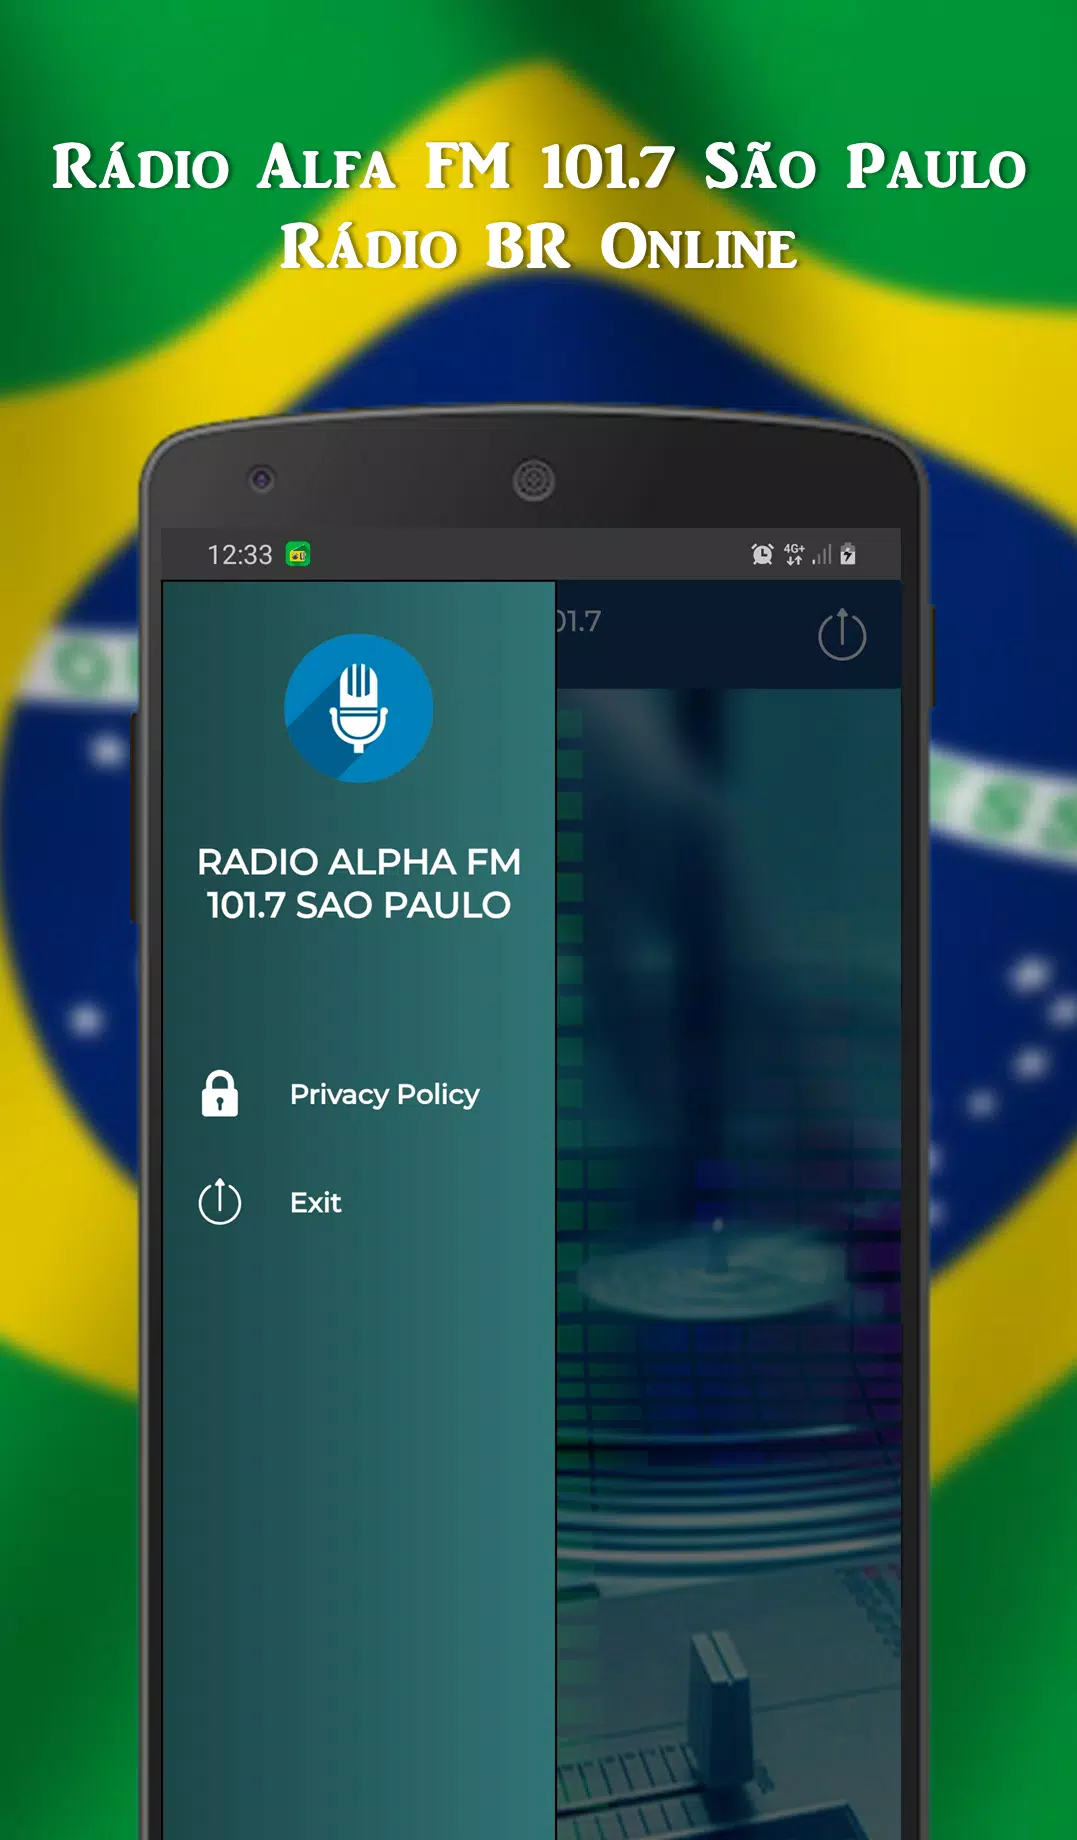 Radio Alfa FM 101.7 Sao Paulo - BR Radio Online APK voor Android Download